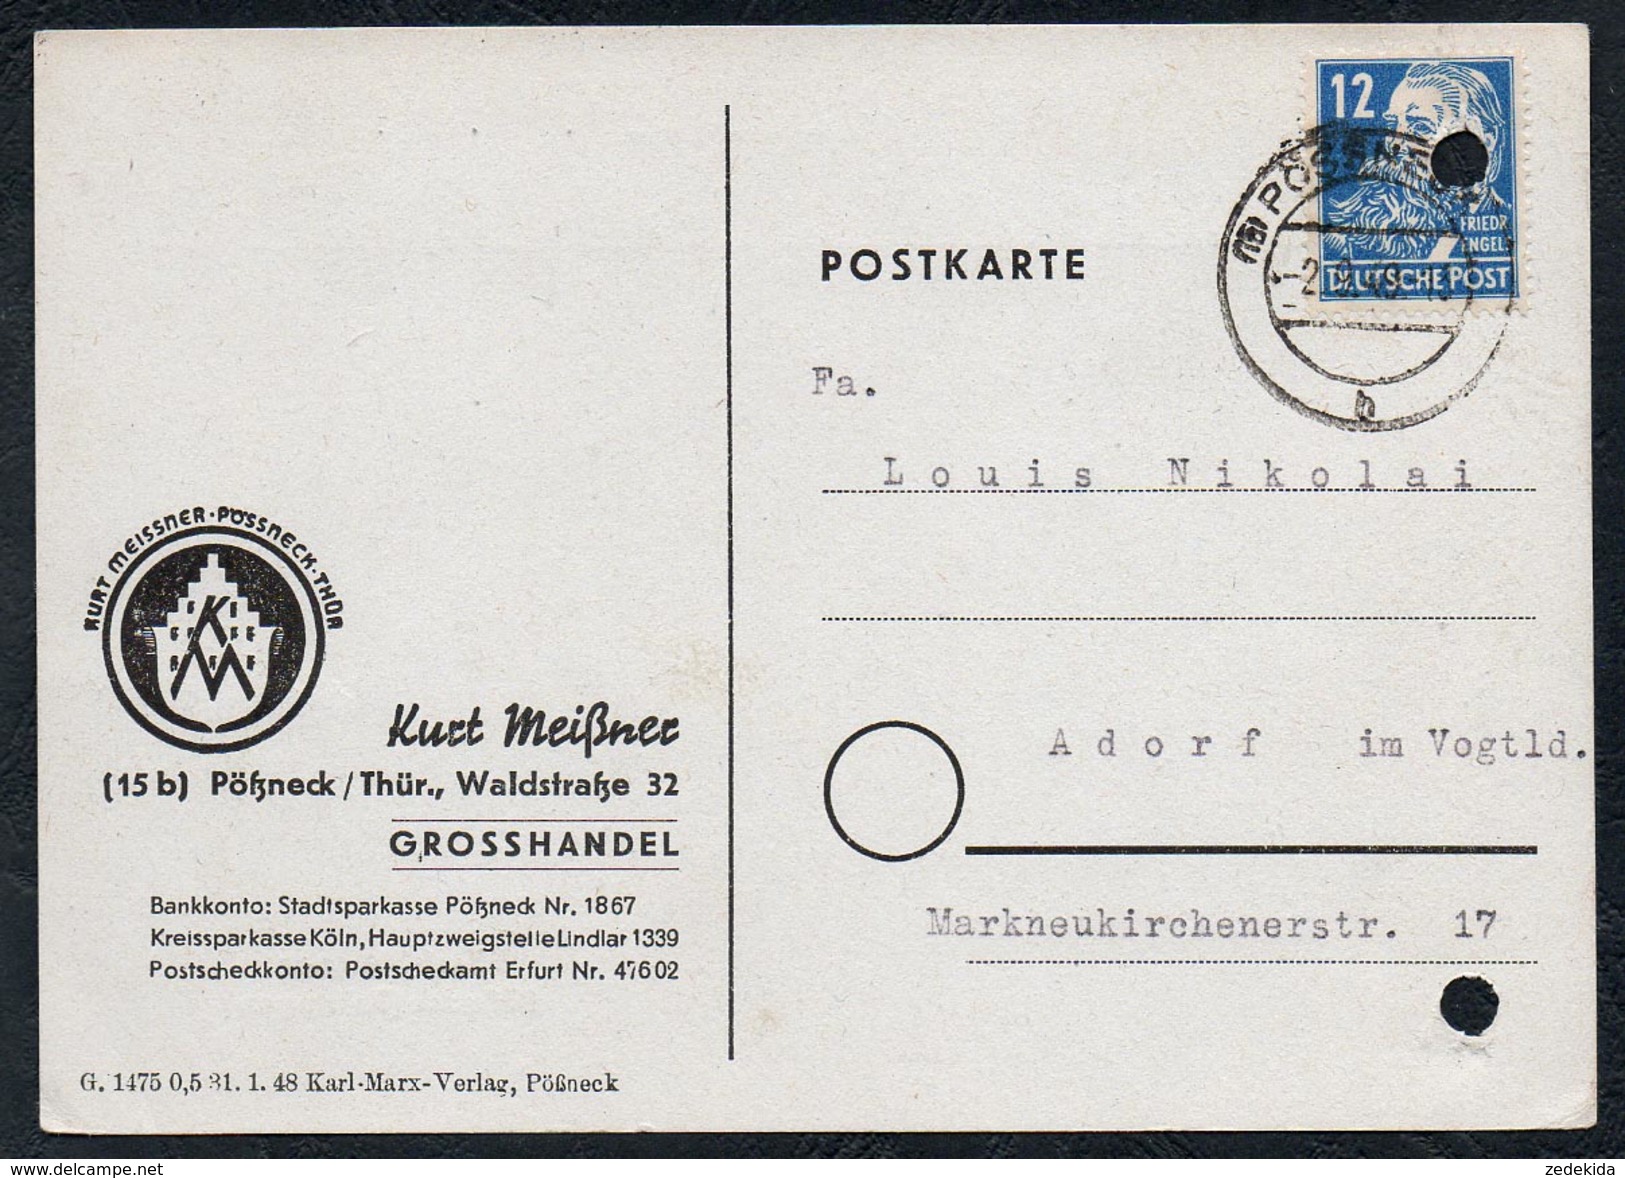 A6239 - Alte Postkarte - Bedarfspost - Pössneck - Pößneck - Kurt Meißner Grosshandlung Nach Adorf 1949 - Poessneck